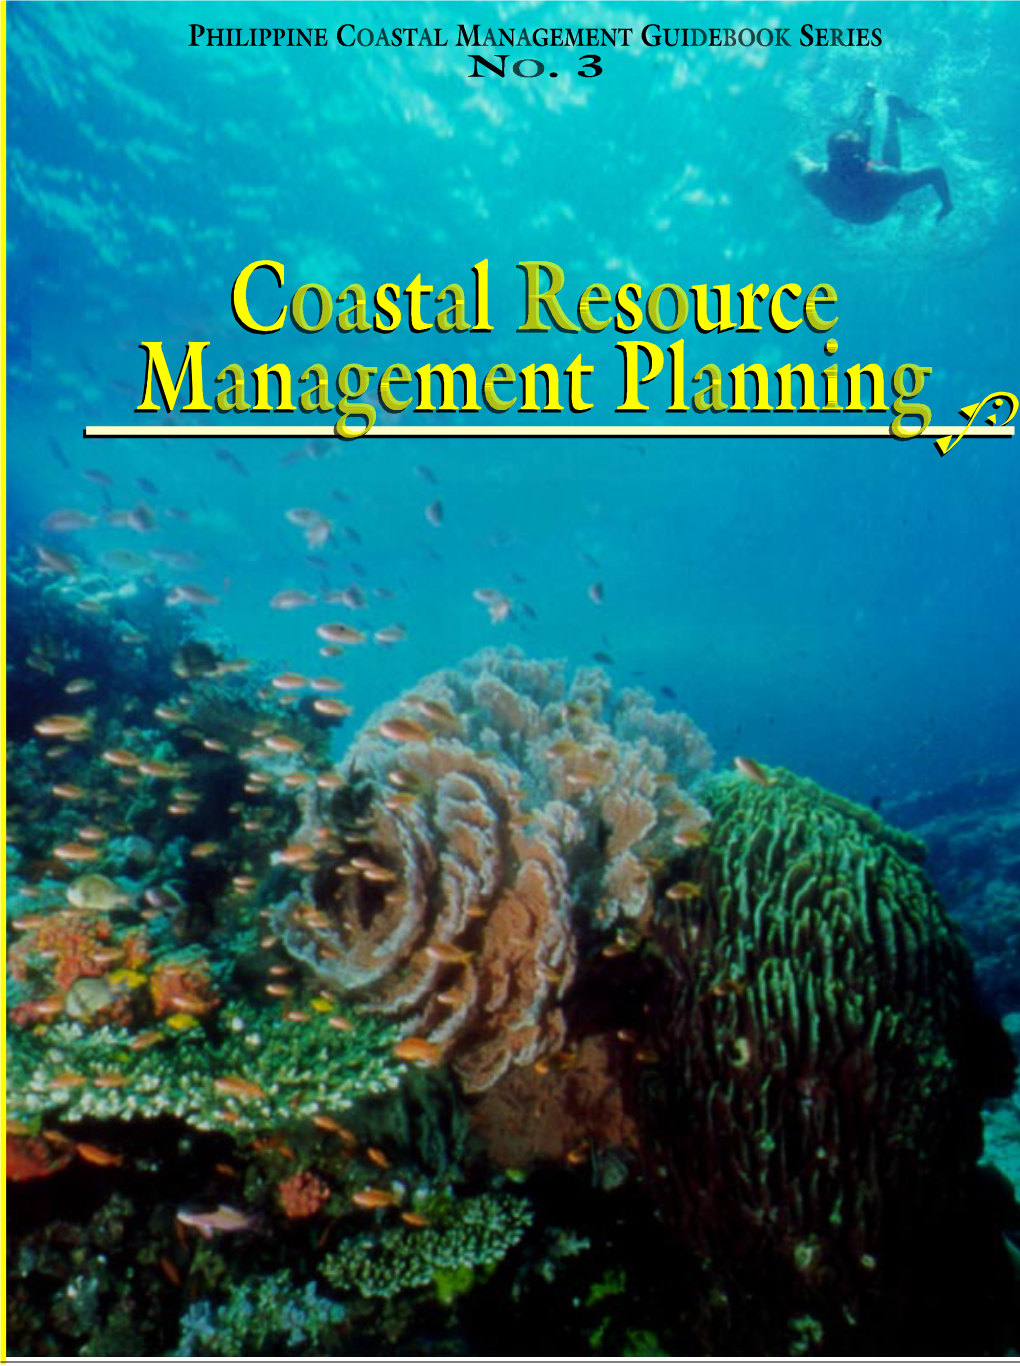 PHILIPPINE COASTAL MANAGEMENT GUIDEBOOK SERIES NO. 3 Coastal Resource Management Planning By